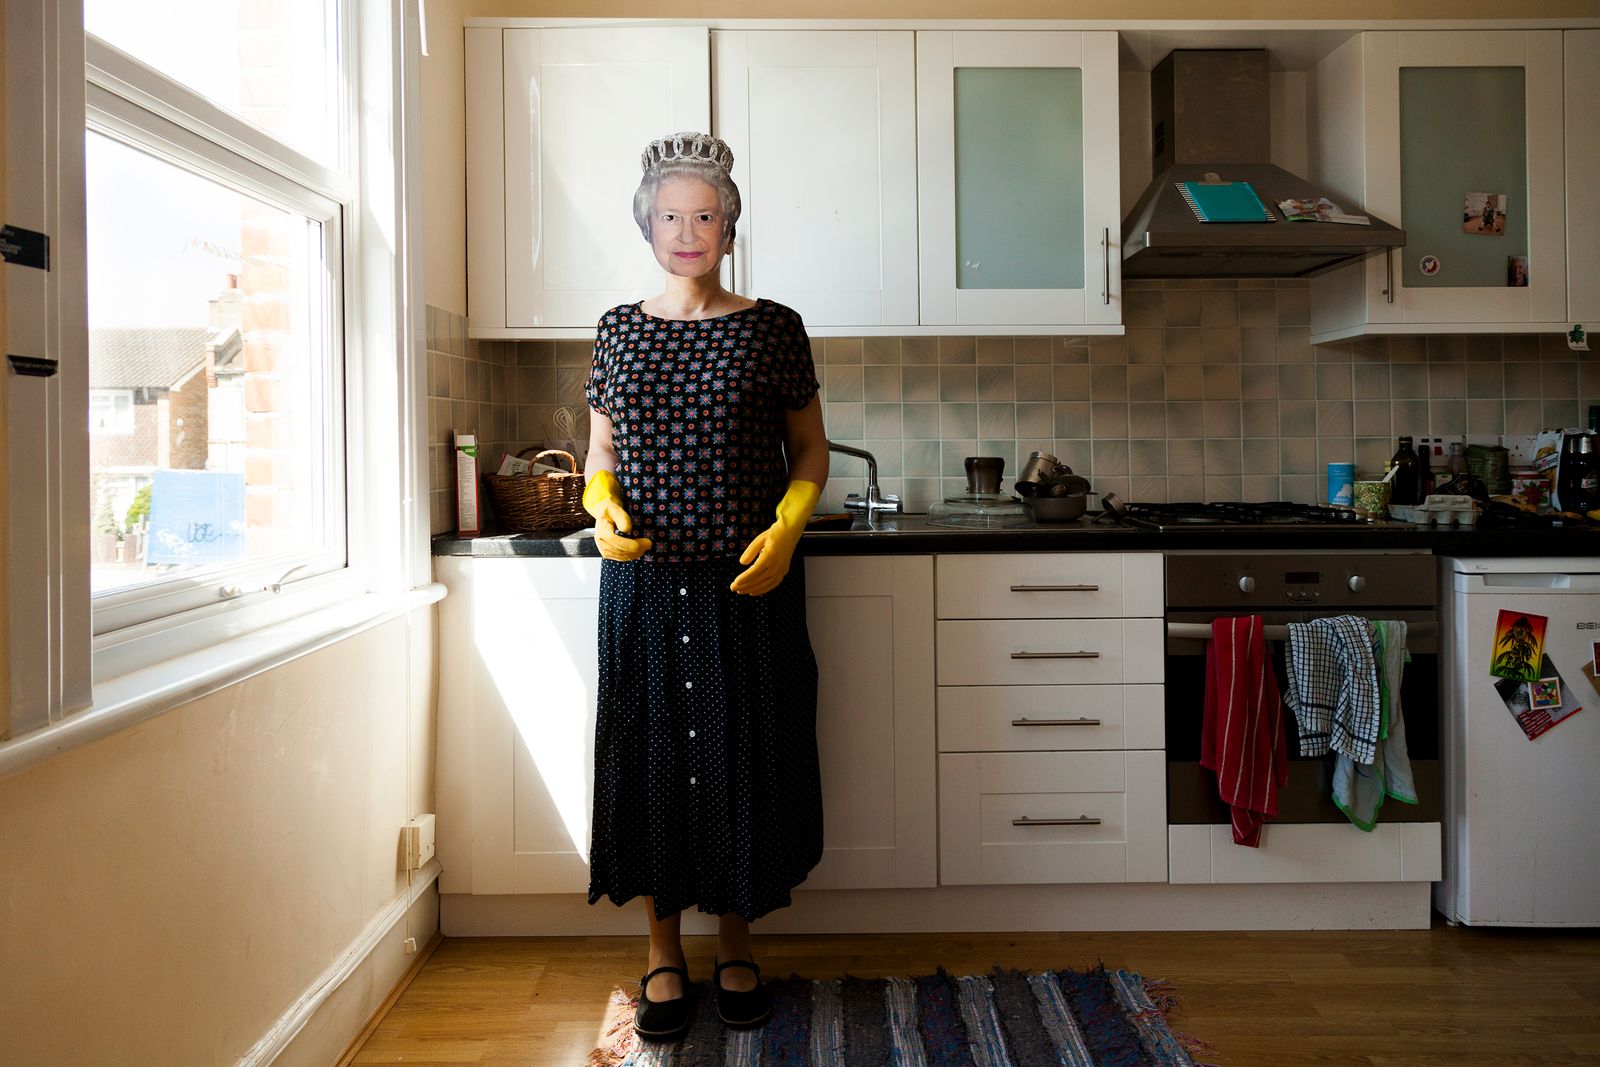 © Michela Carmazzi - "I wish I were Elizabeth in my kitchen" Self-portrait wearing a cardboard mask of Queen Elizabeth in my kitchen.